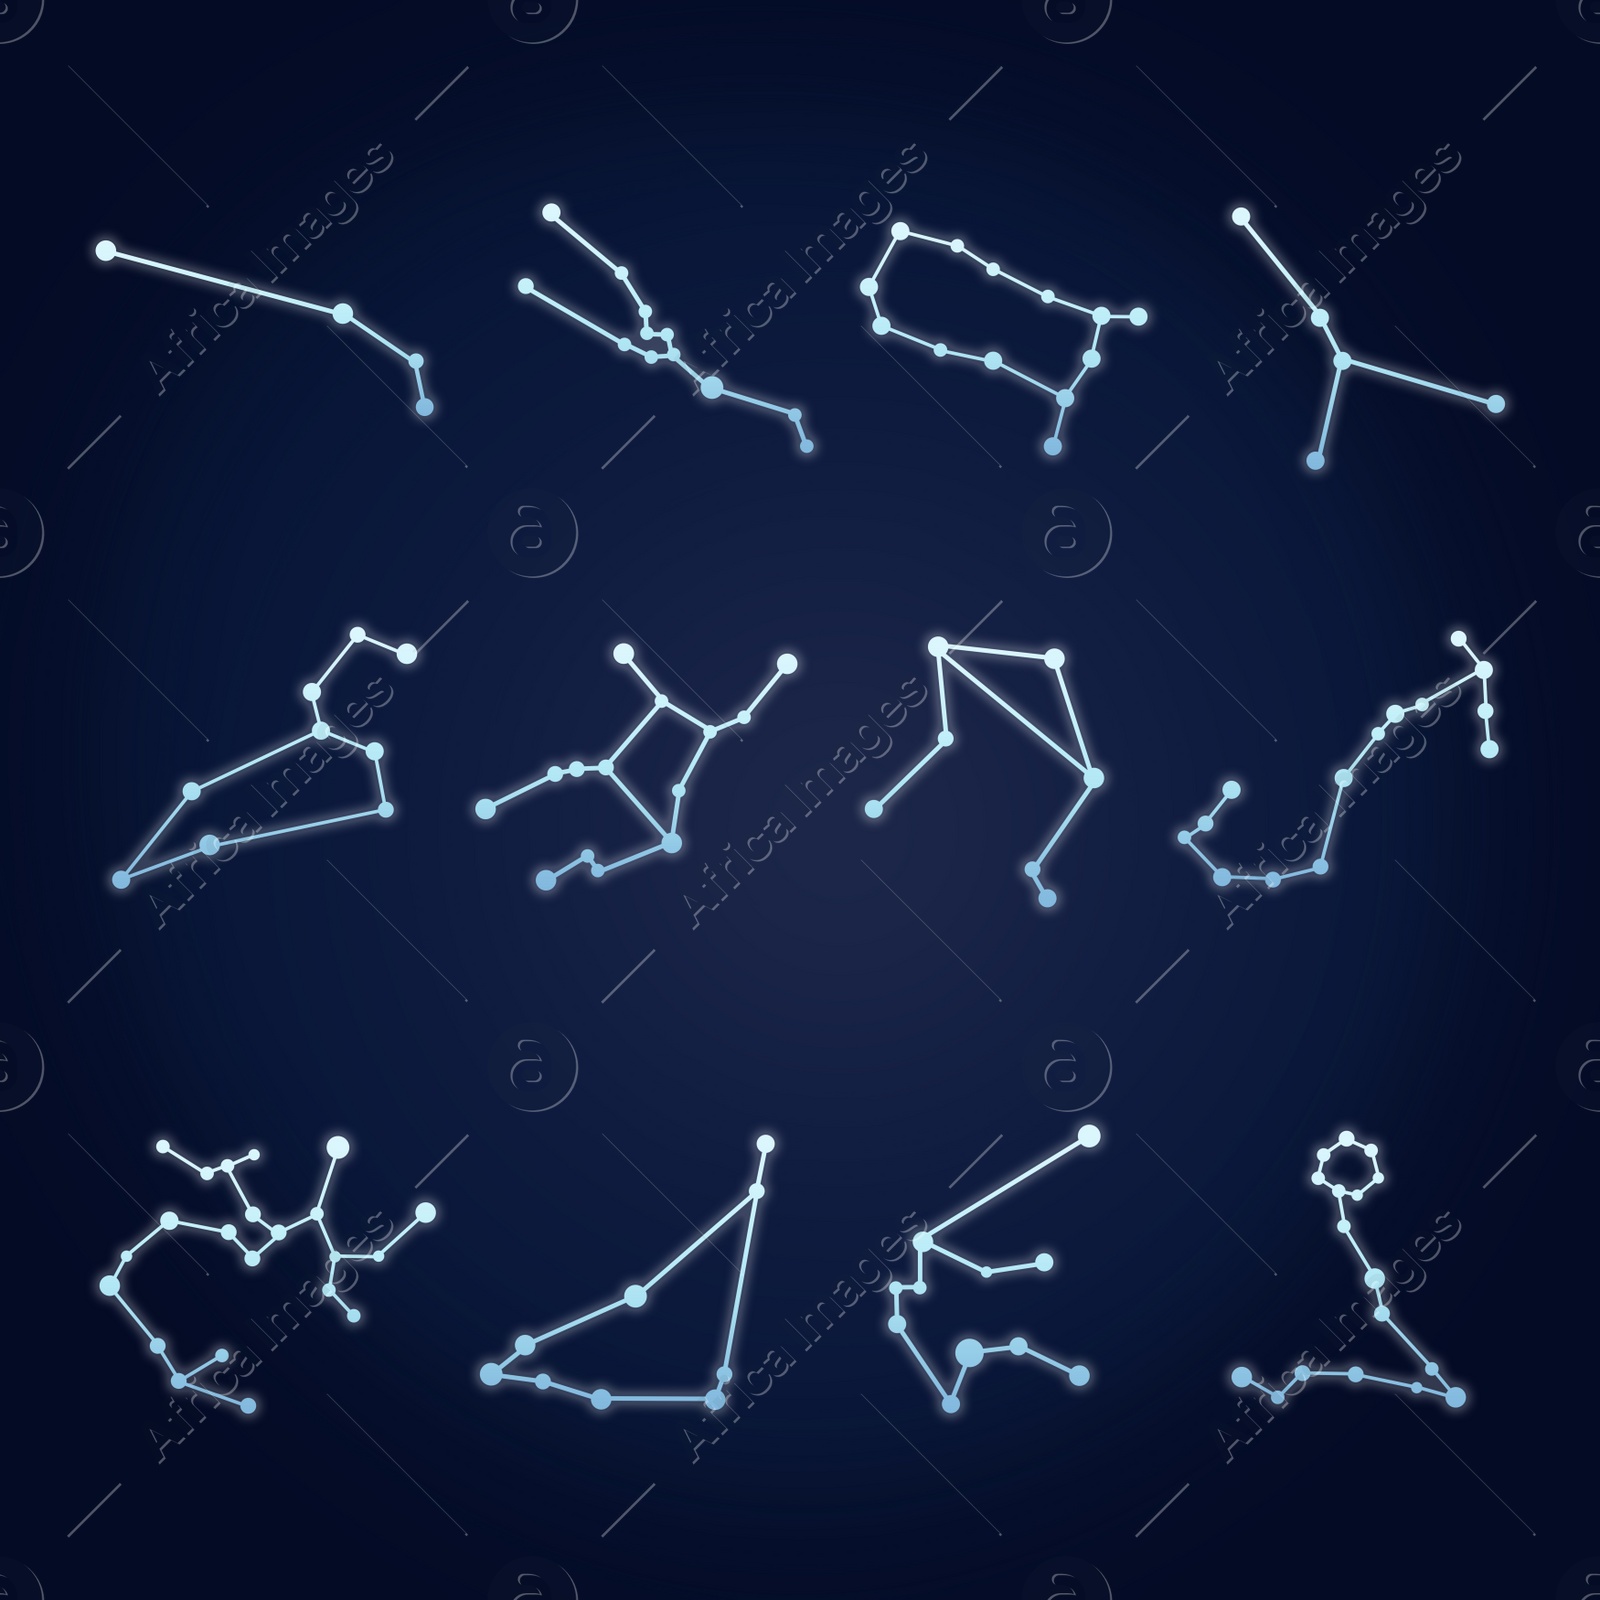 Illustration of Set with zodiac constellations on dark blue background